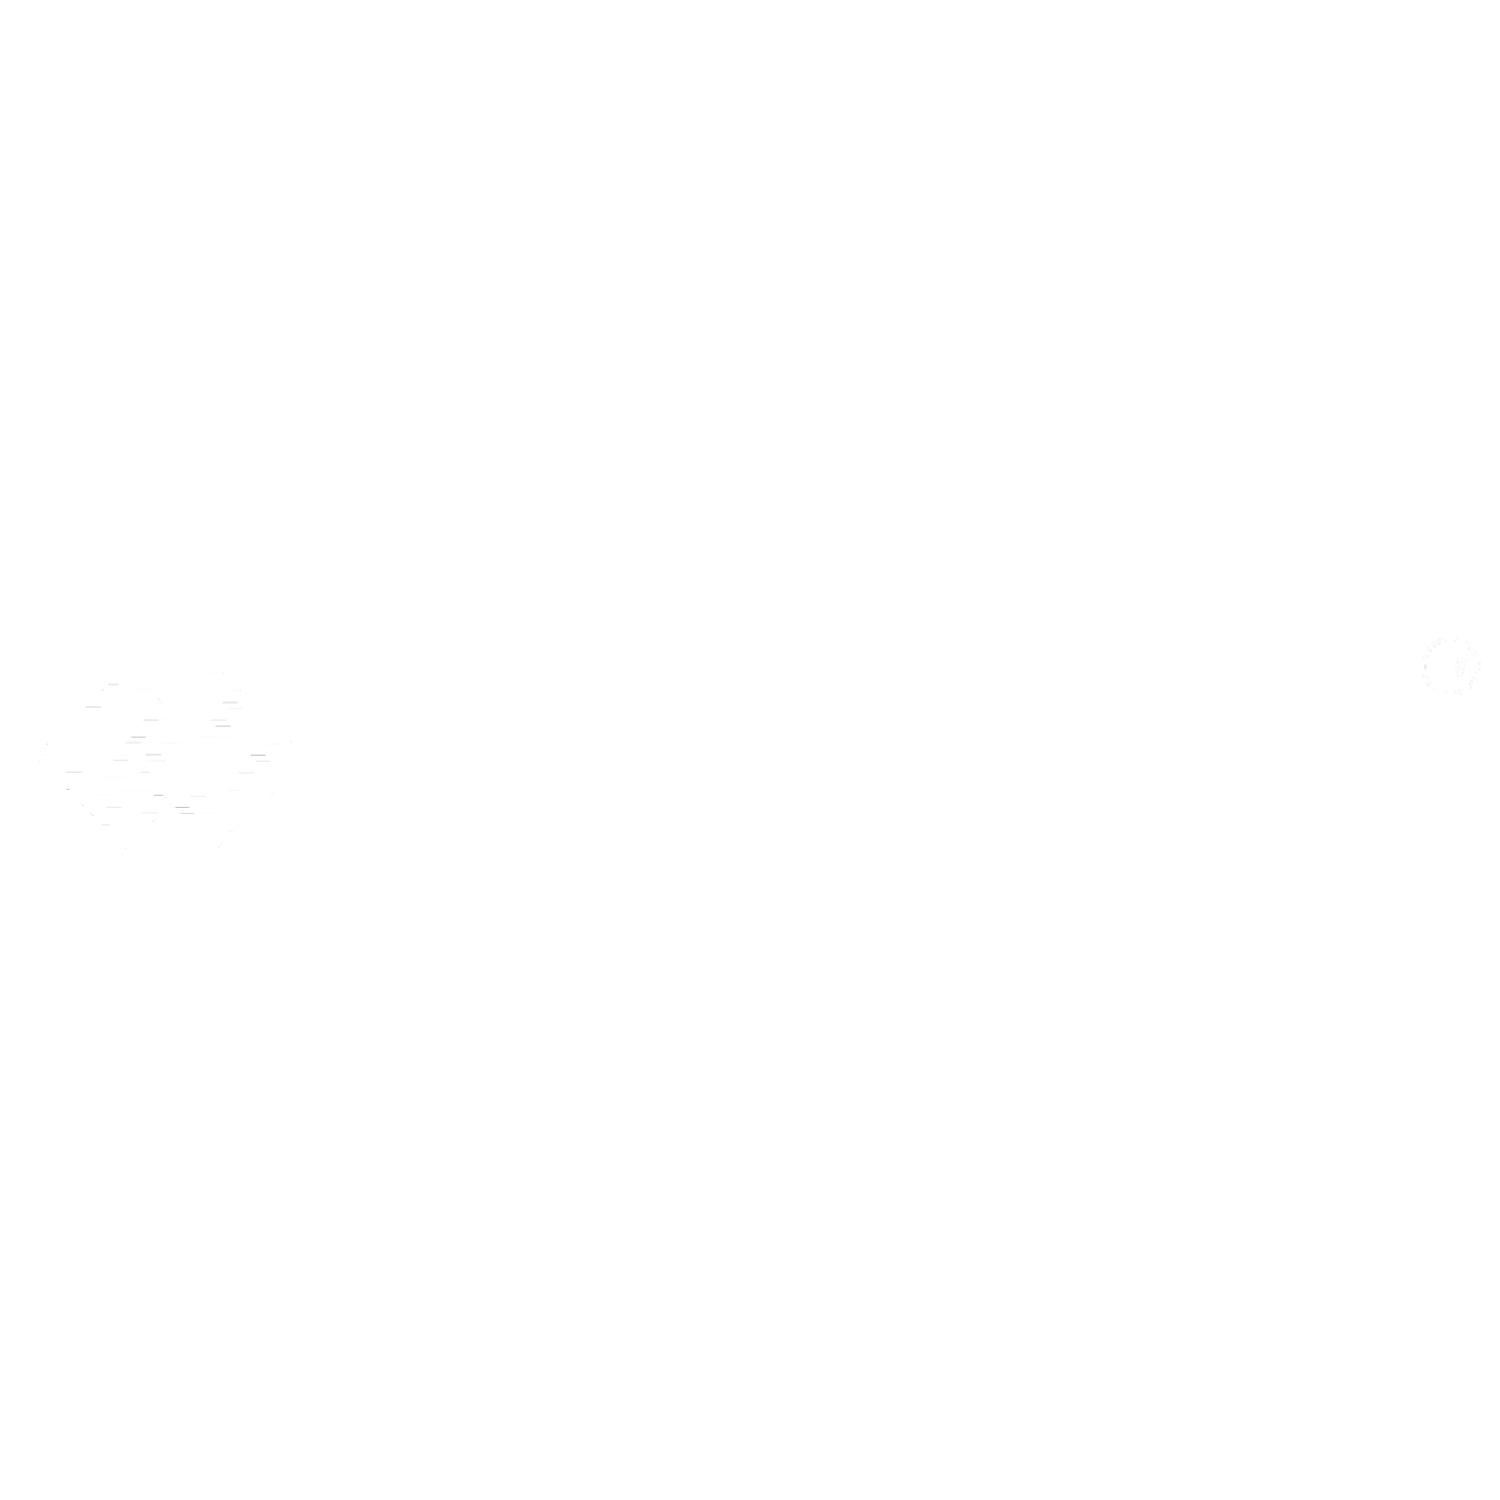 Latyton homecare solutions